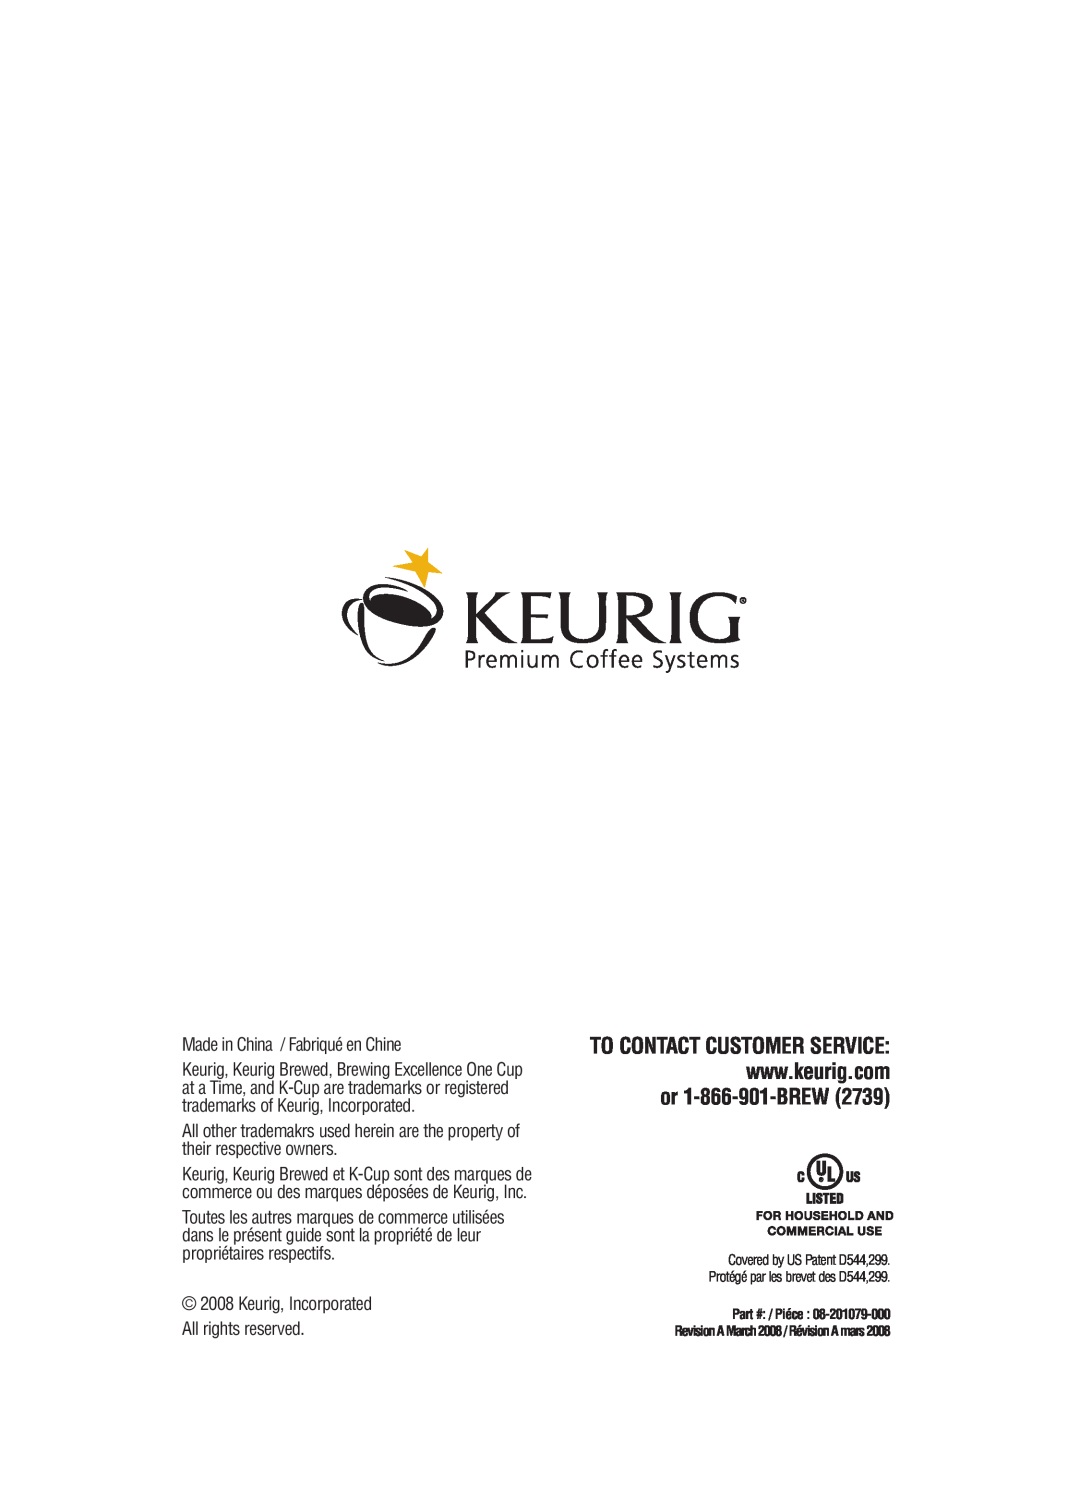 Keurig B30 Keurig, Incorporated All rights reserved, Covered by US Patent D544,299, Protégé par les brevet des D544,299 